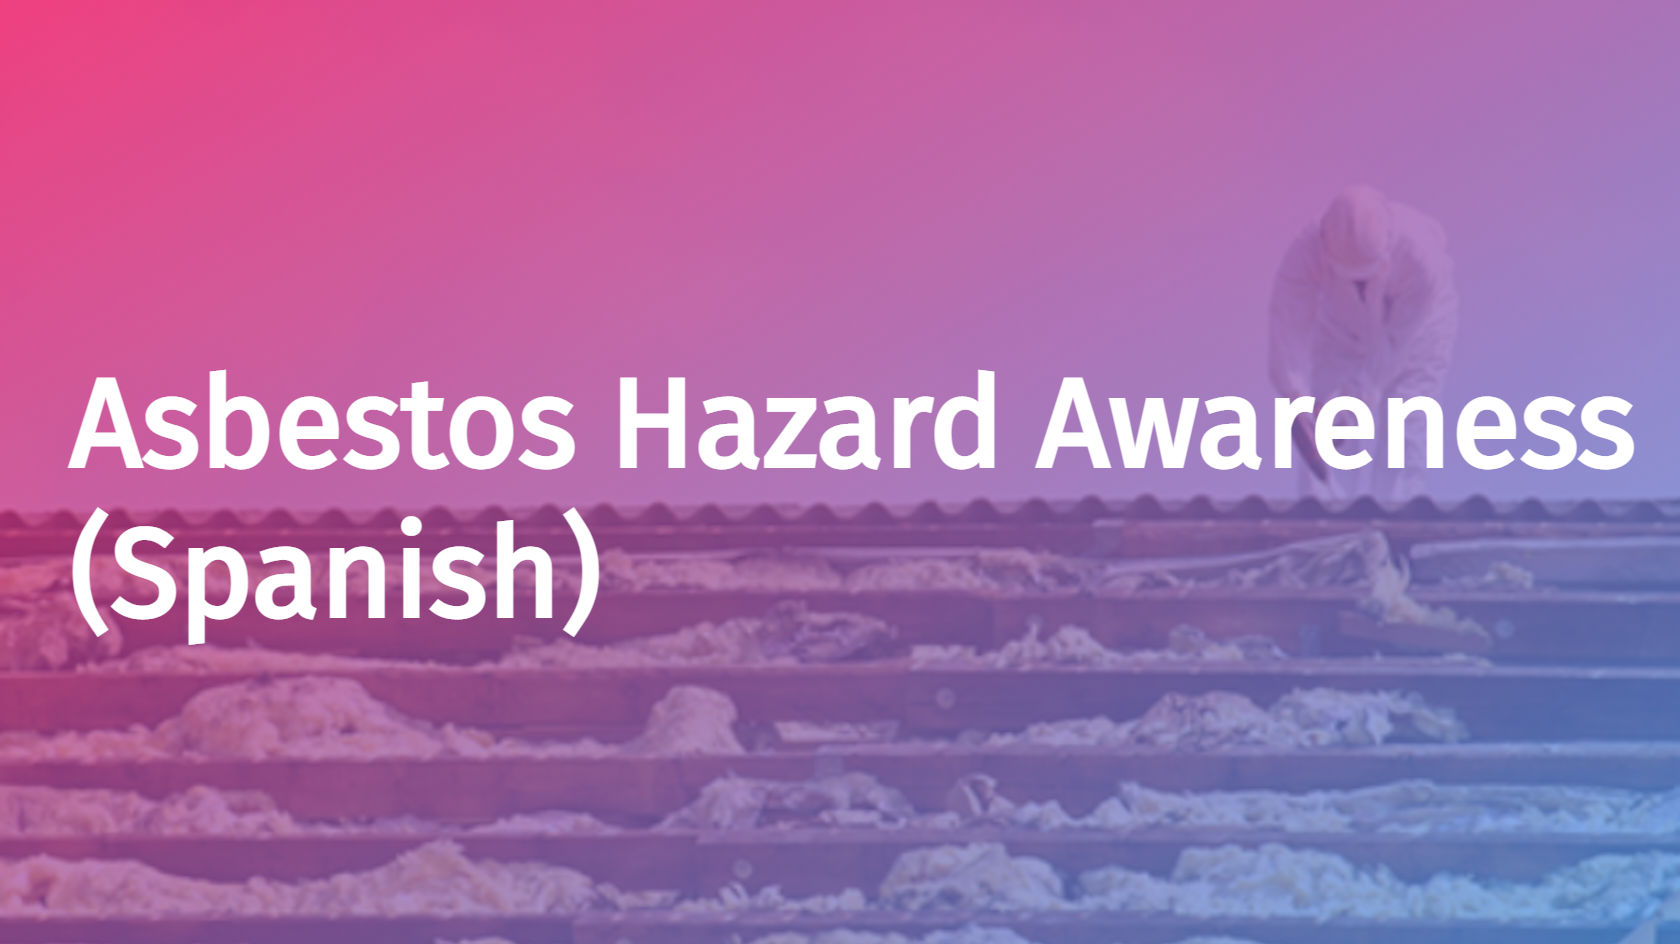 Spanish - Asbestos Hazard Awareness